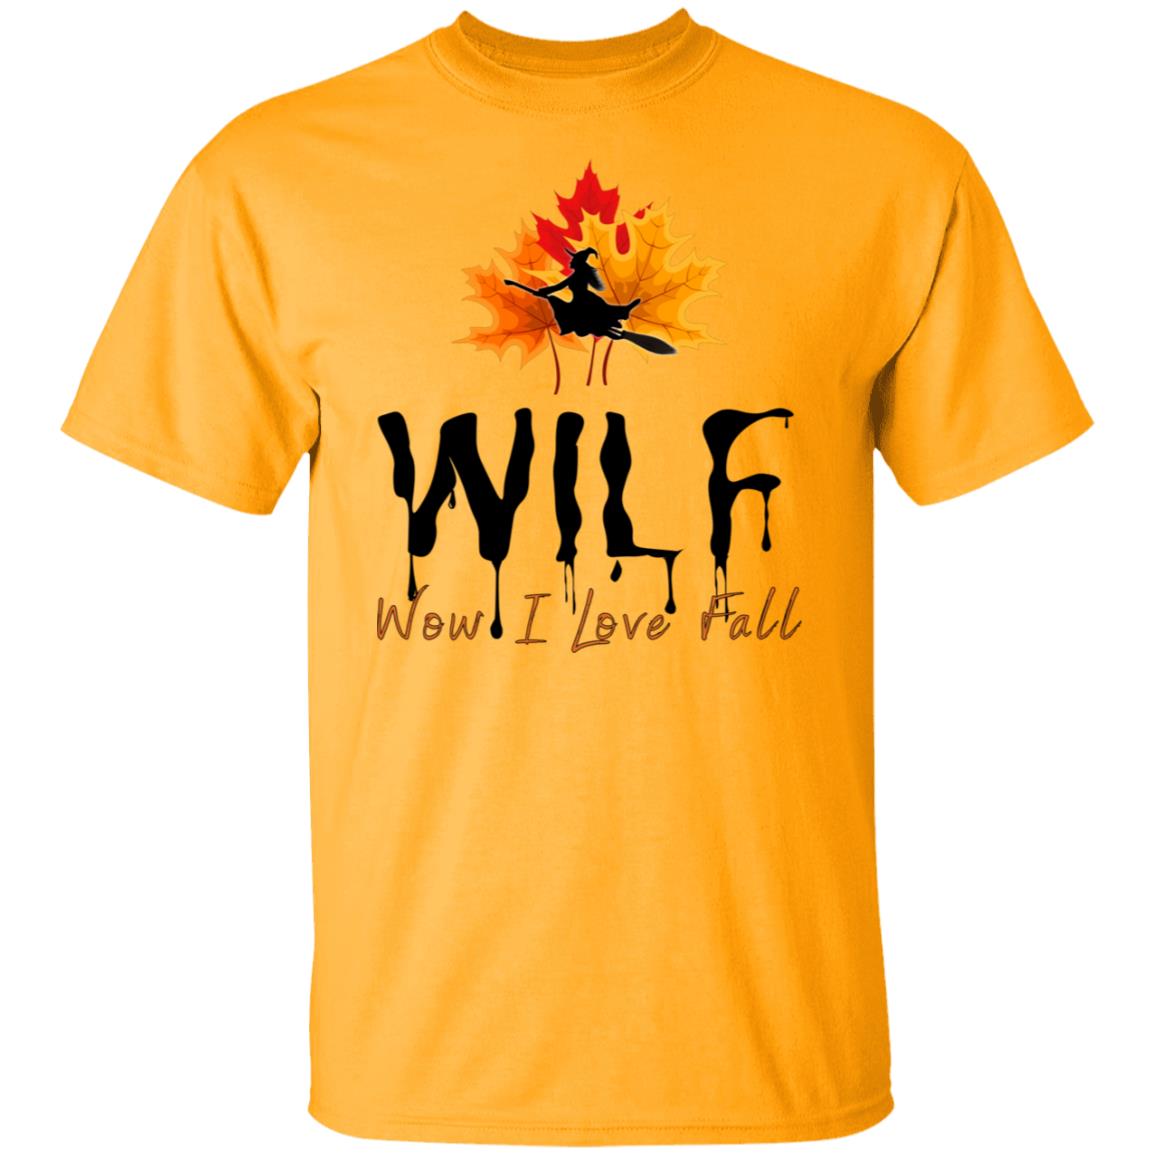 Copy of Wow I love Fall WILF T Shirt WILF Wow I Love Fall T-Shirt